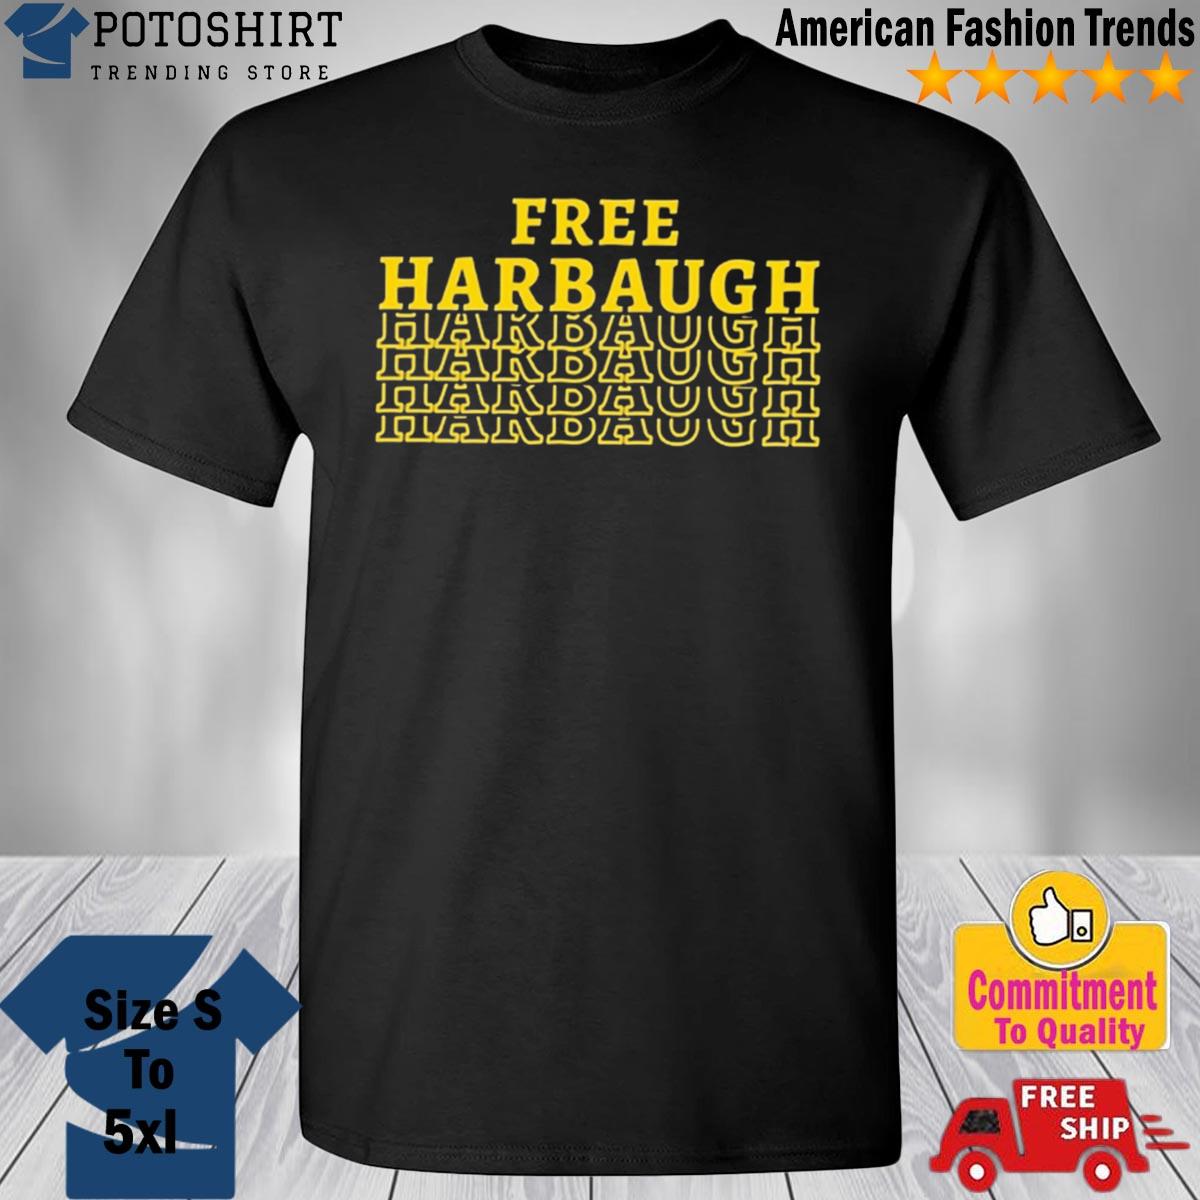 Free Harbaugh Shirt Michigan Football Shirt Football Shirt